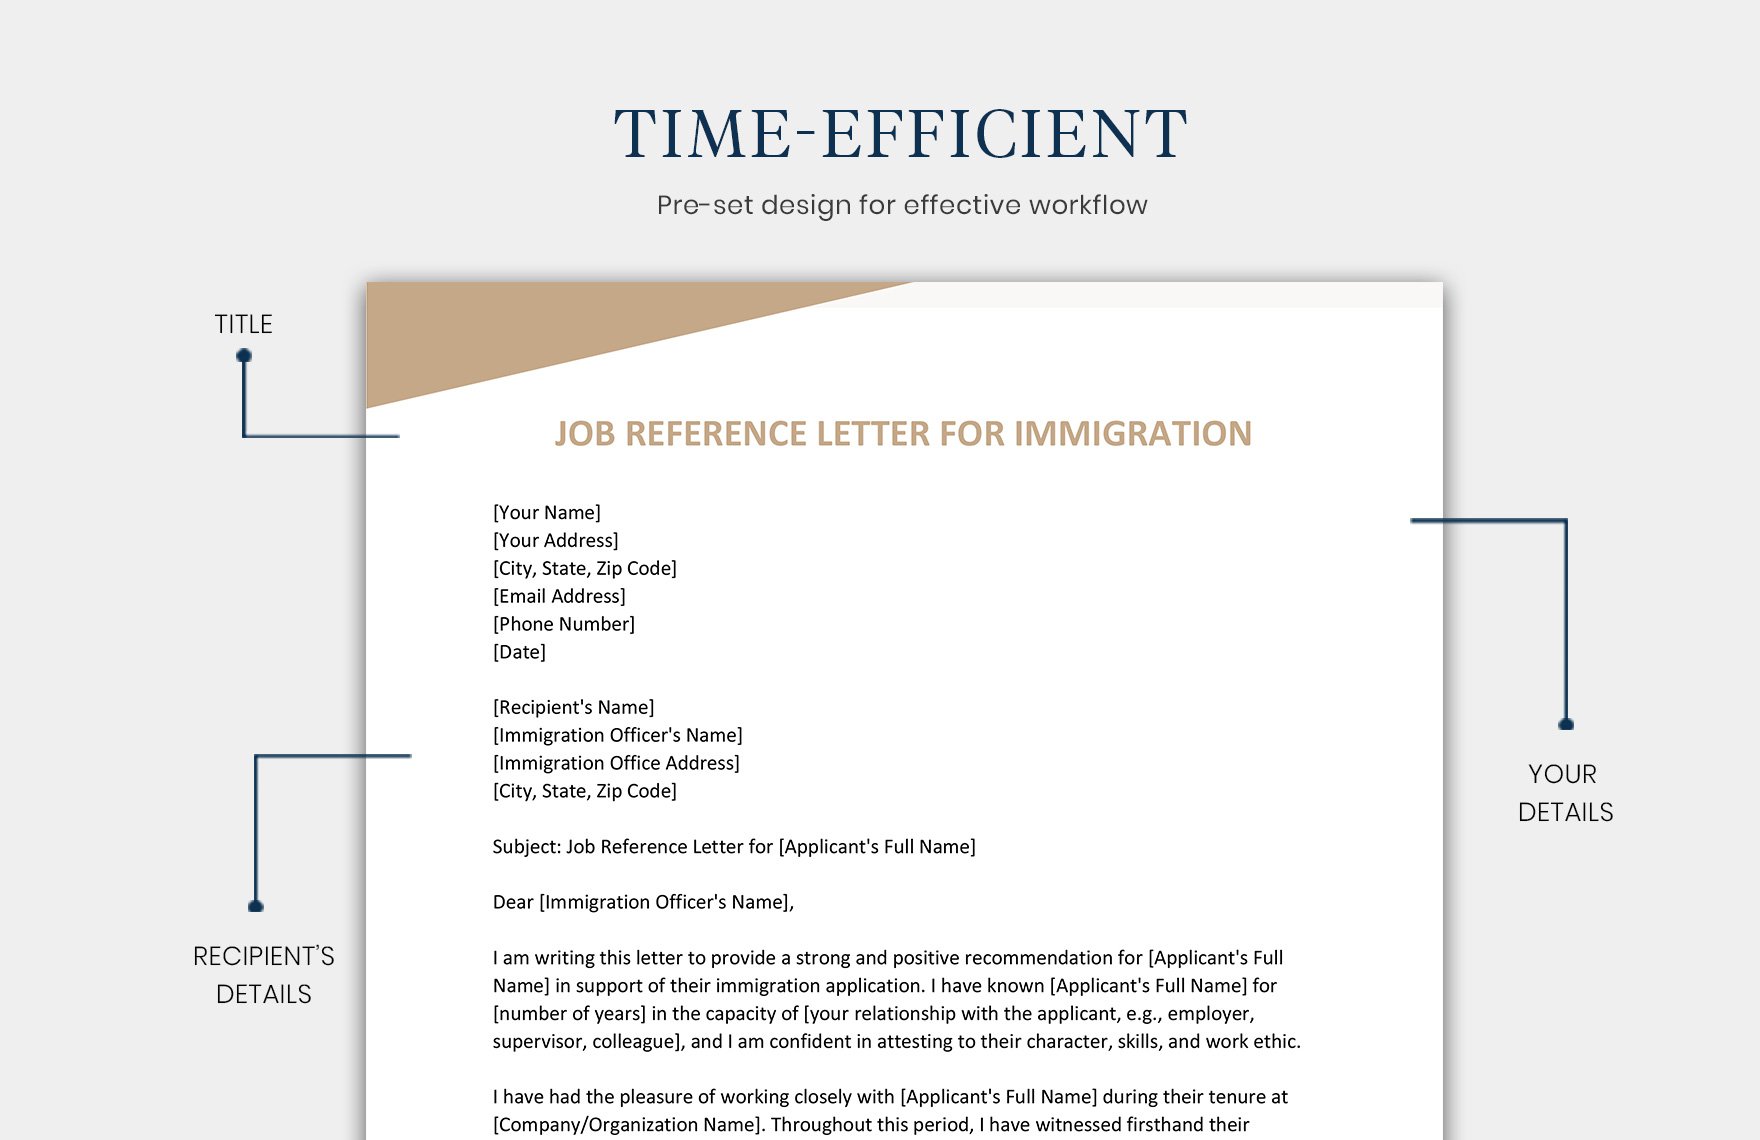 Job Reference Letter for Immigration